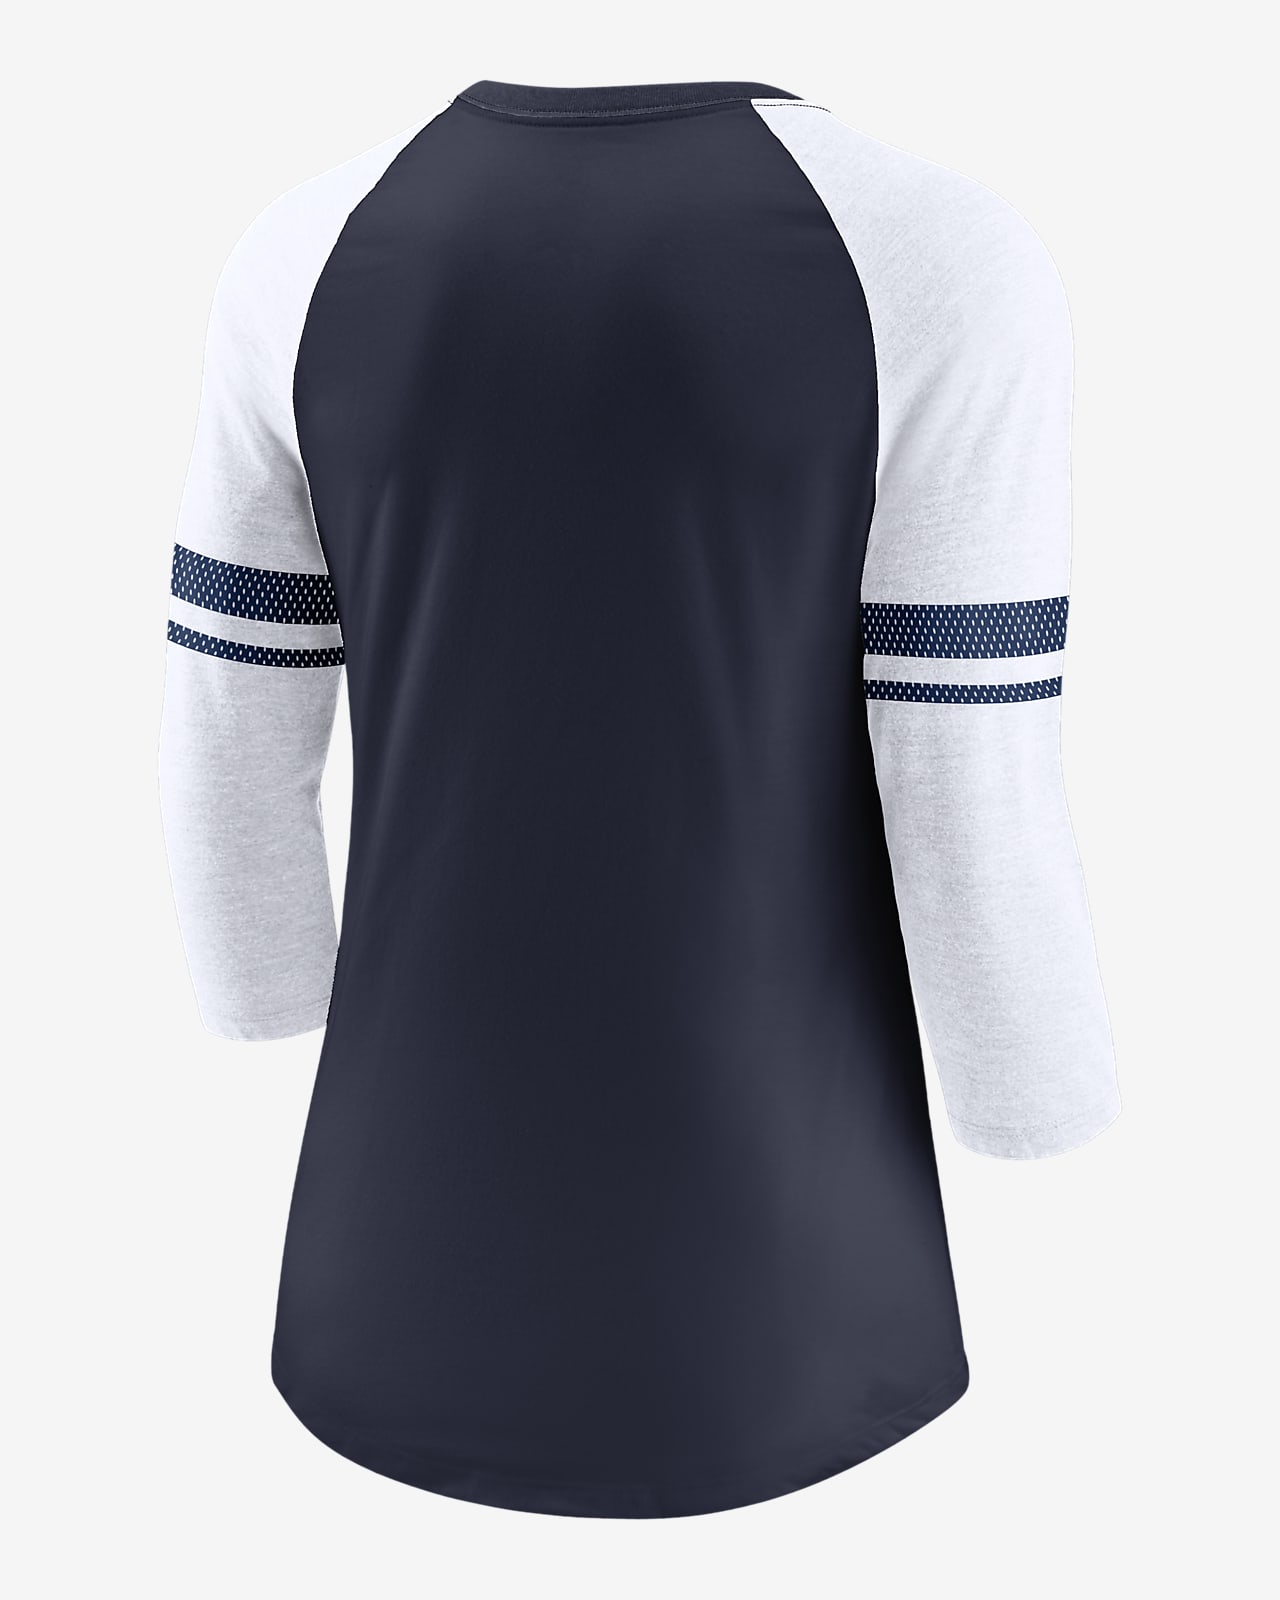 Nike Fashion (NFL Tennessee Titans) Women's 3/4-Sleeve T-Shirt.